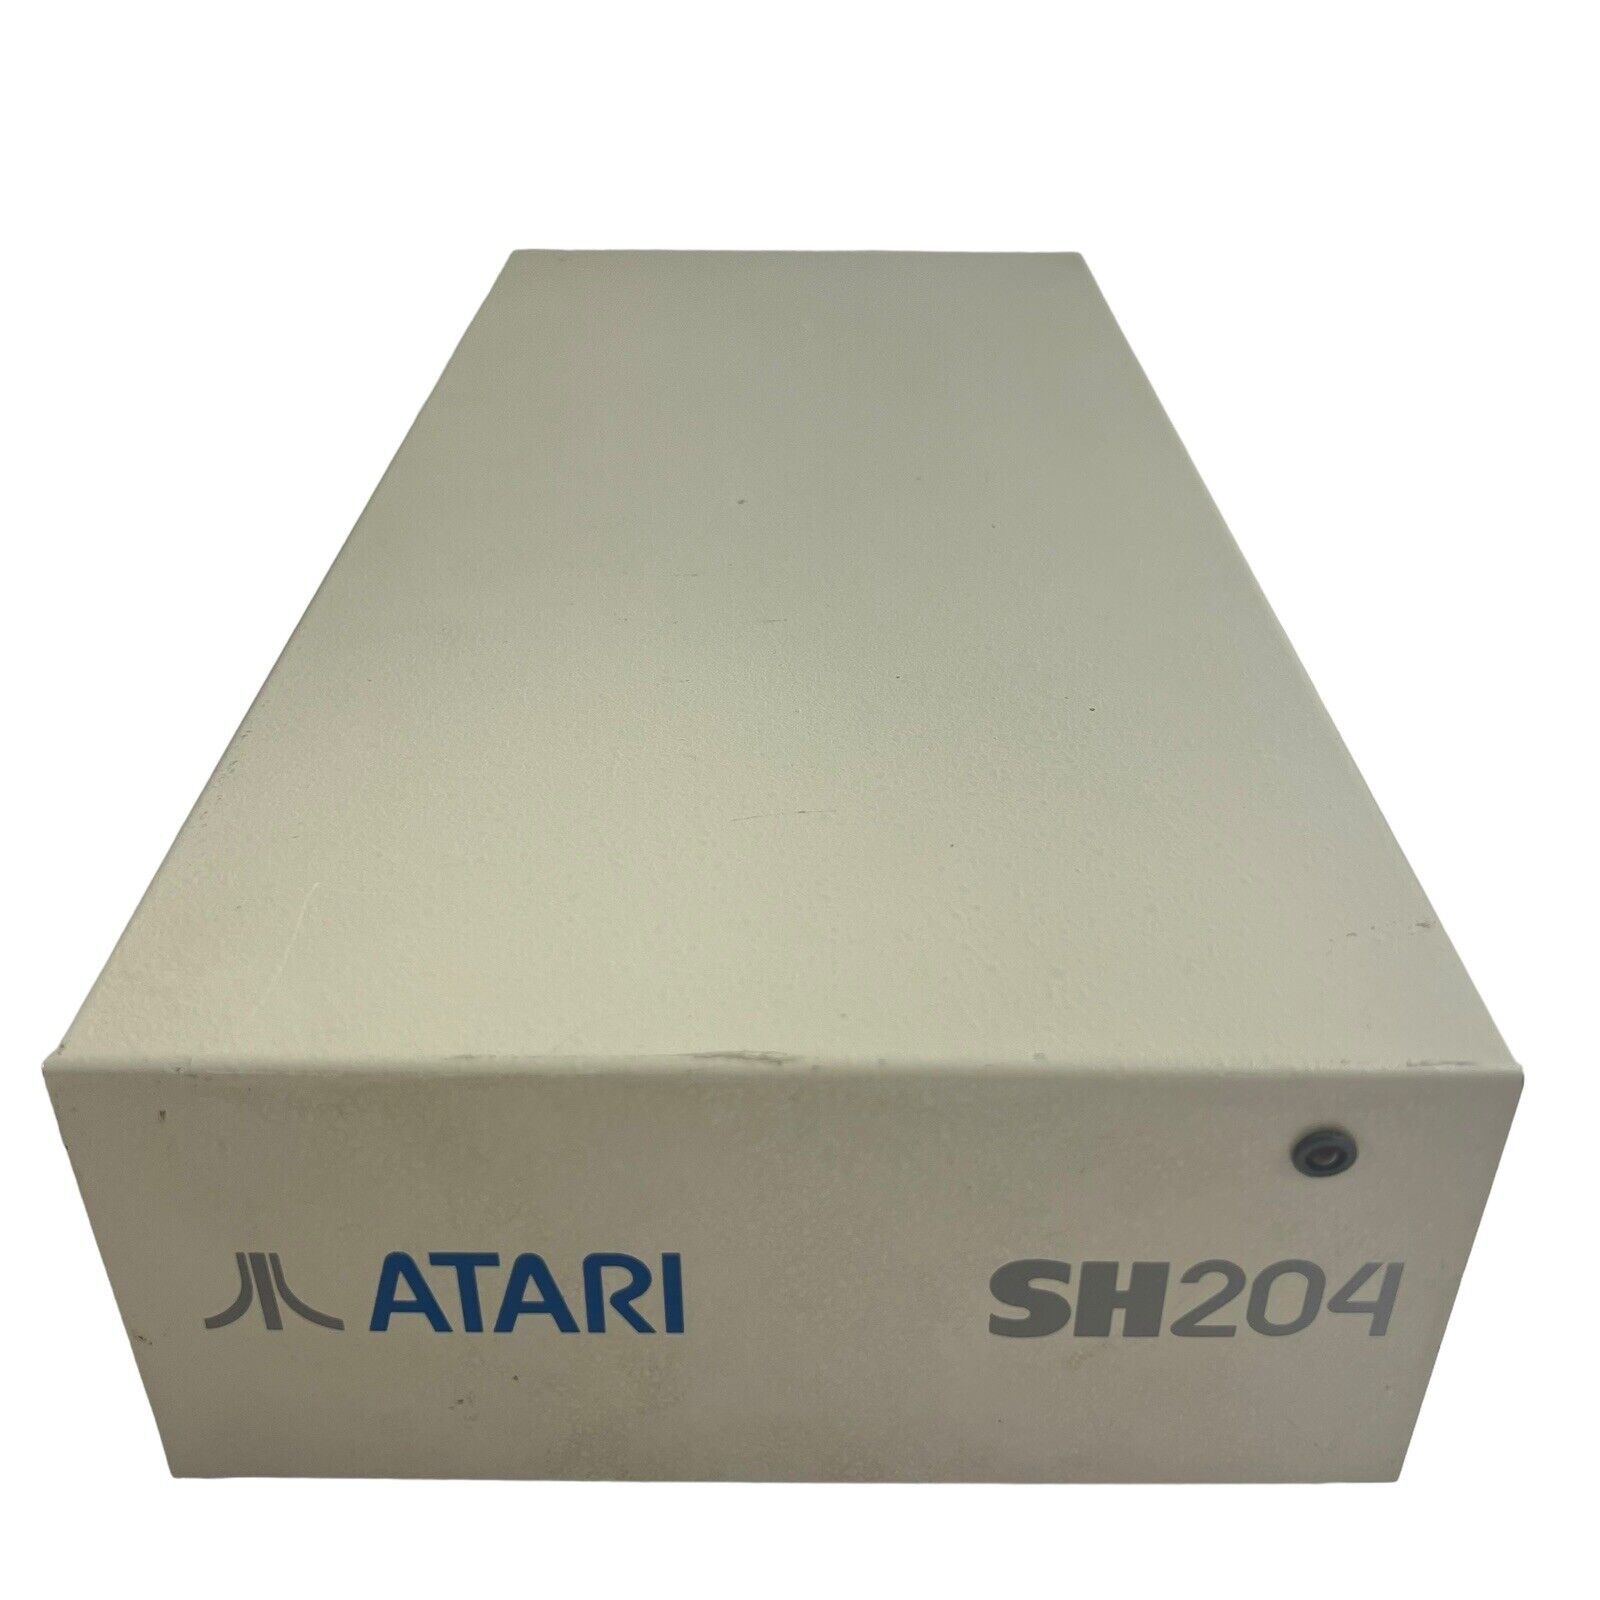 Atari SH204 External 30MB Hard Drive for Atari ST Computers Powers On